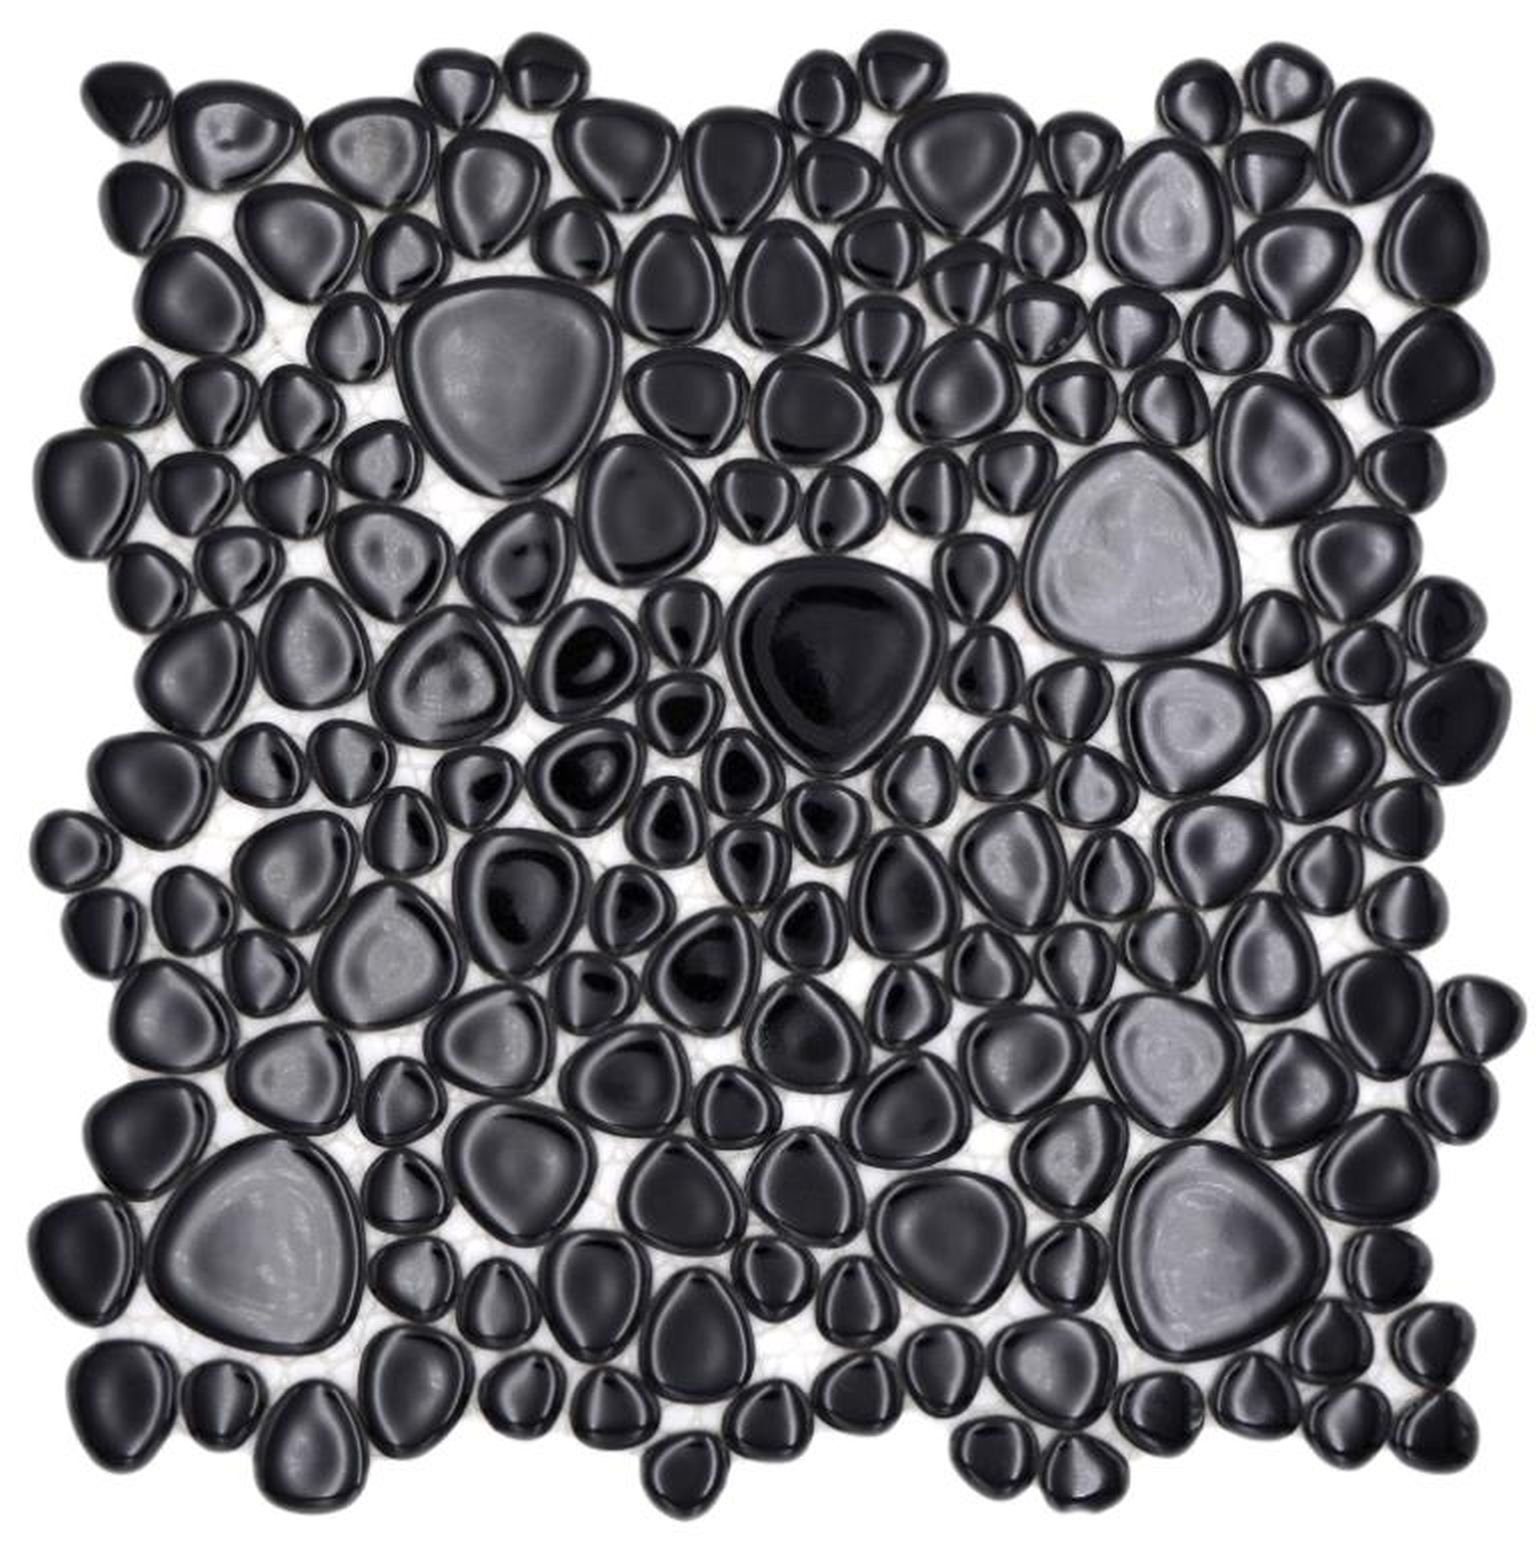 Mosani Mosaikfliesen Oval Keramikmosaik Mosaikfliesen schwarz glänzend / 10 Matten